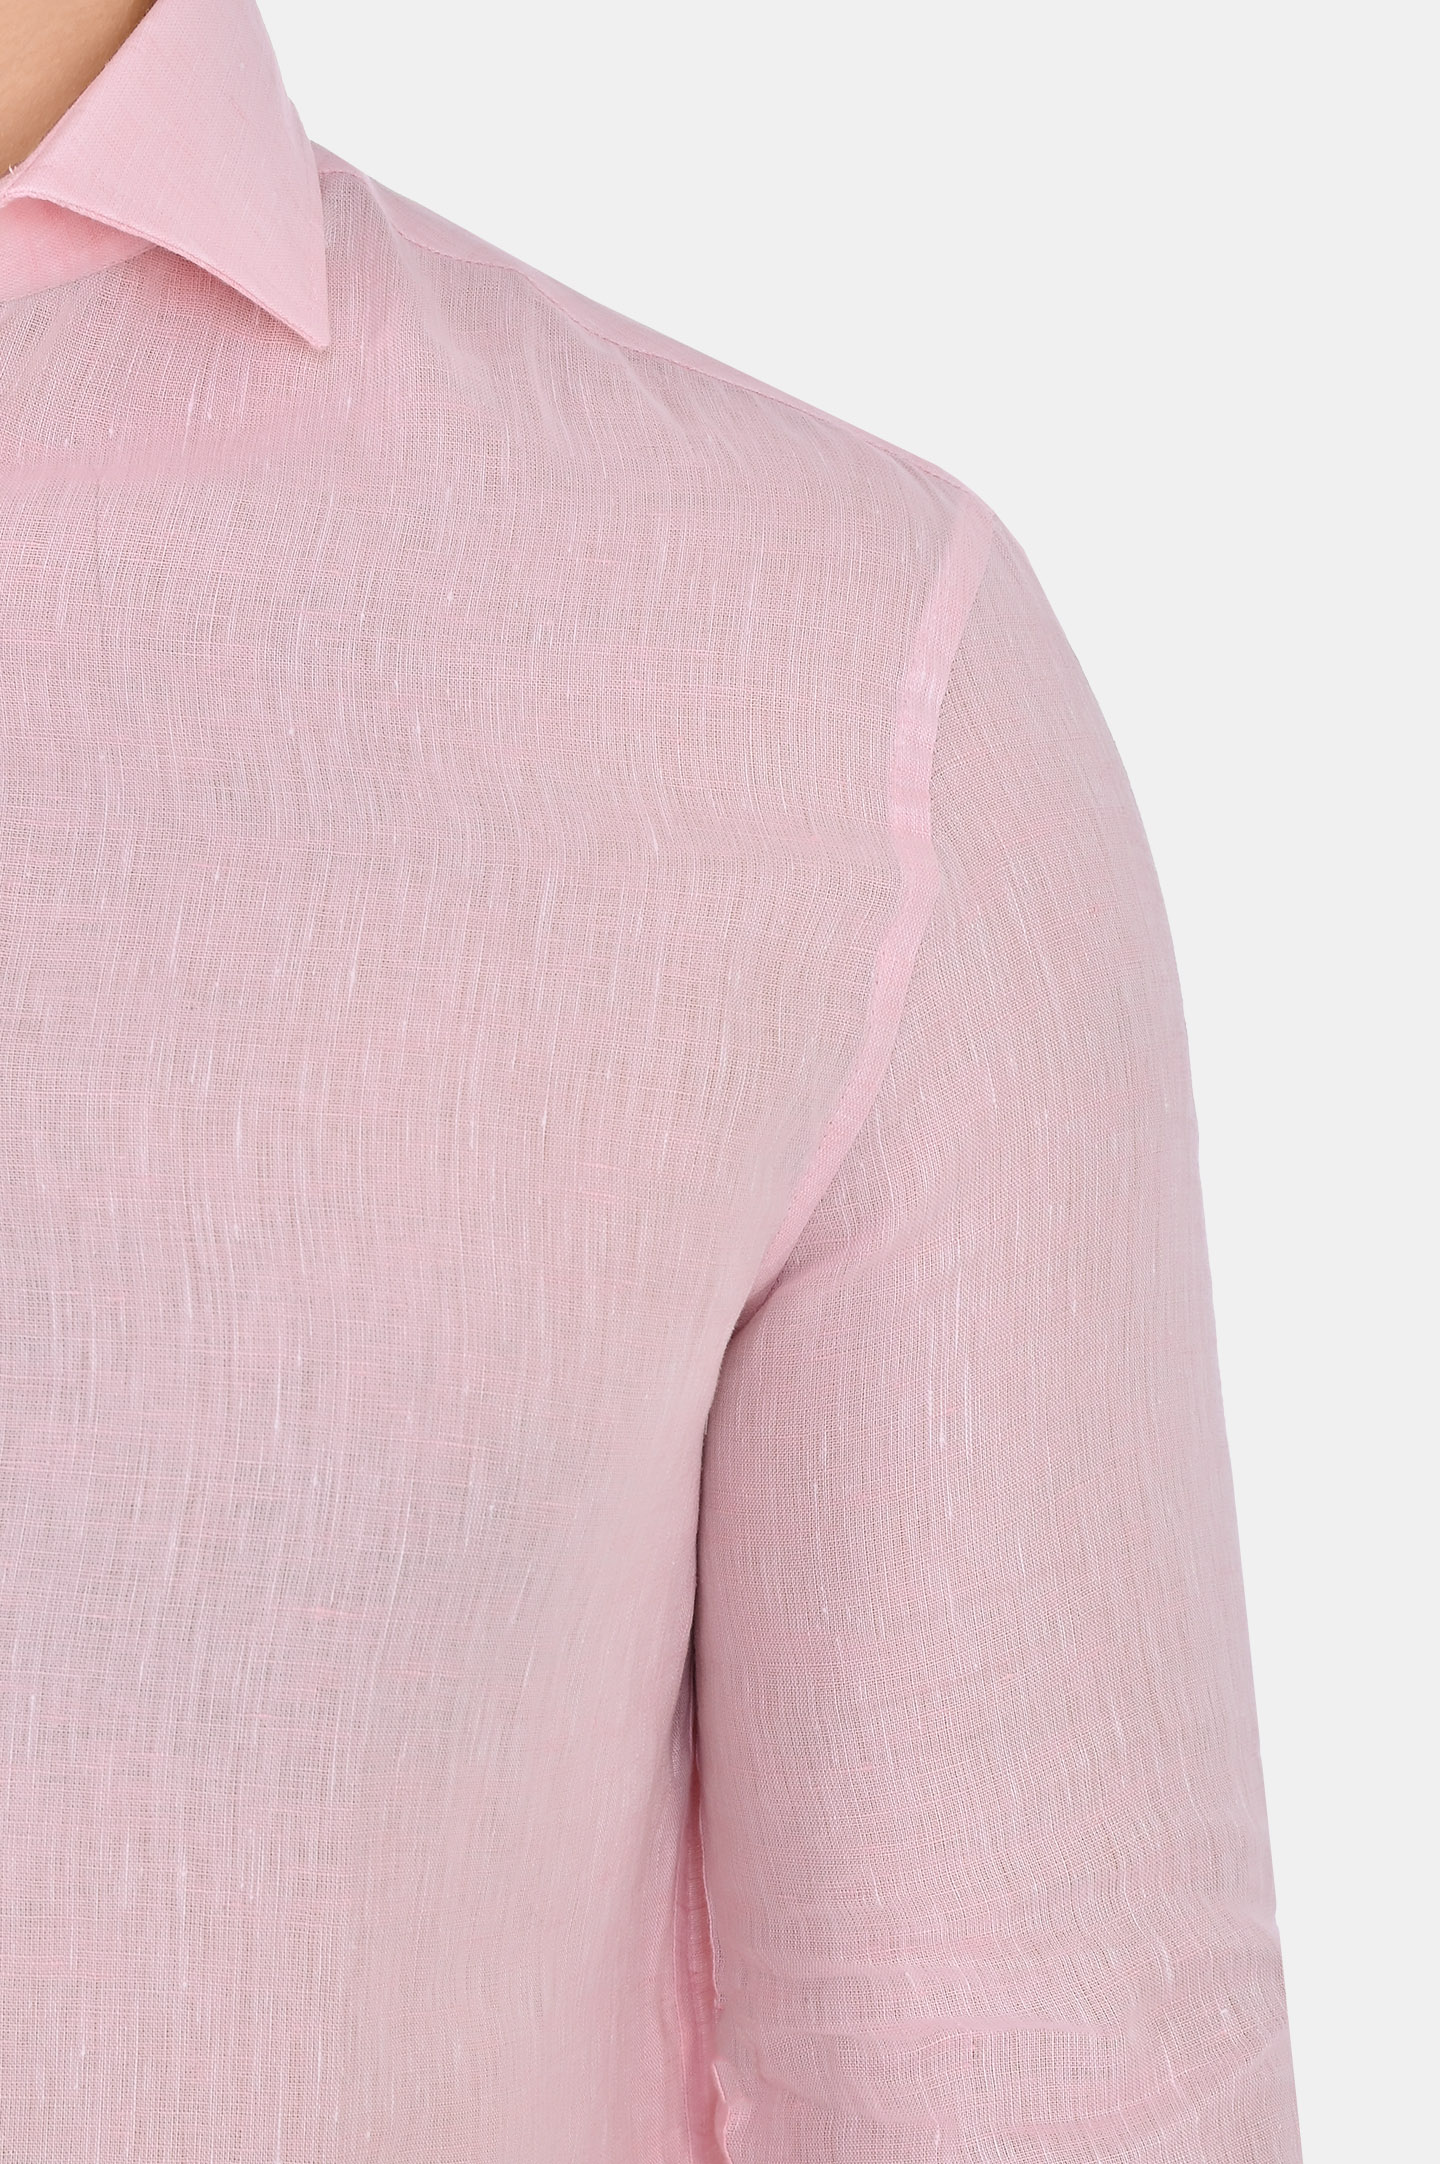 Рубашка BRUNELLO  CUCINELLI MS6500627, цвет: Розовый, Мужской